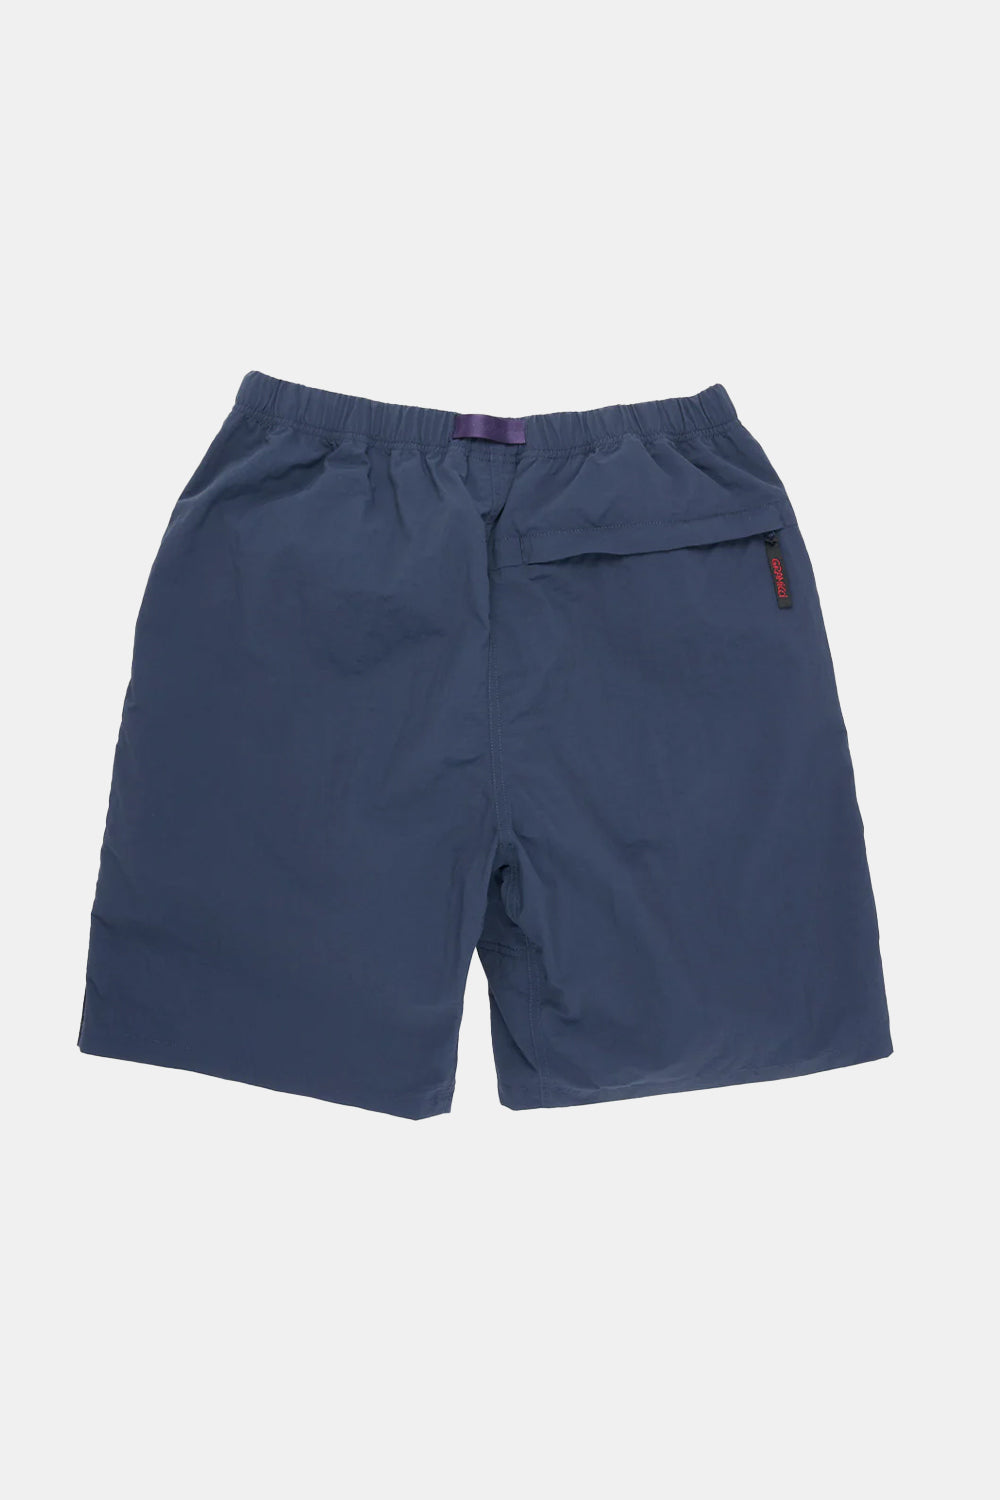 Gramicci Packable Nylon G-Shorts (Navy)